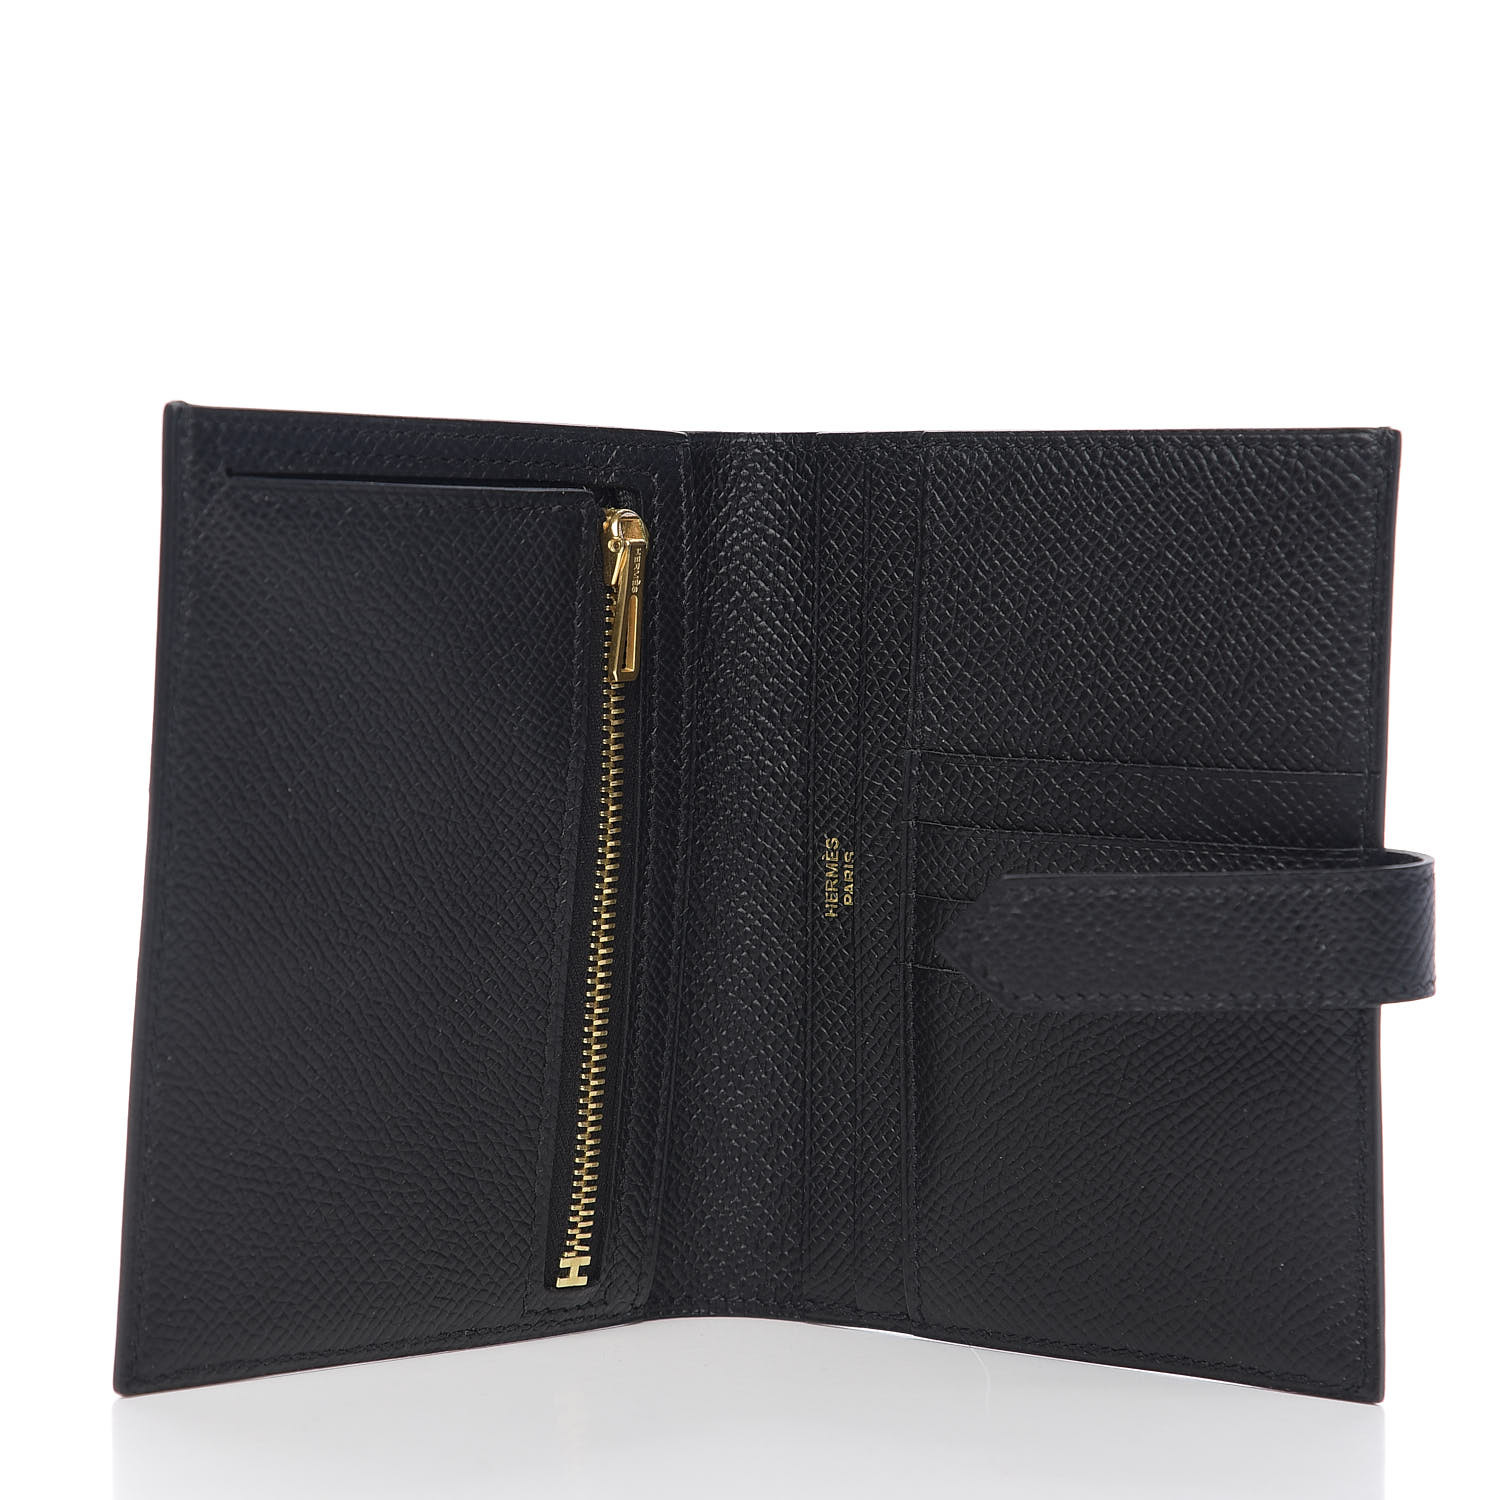 HERMES Epsom Bearn Compact Wallet Black 562251 | FASHIONPHILE